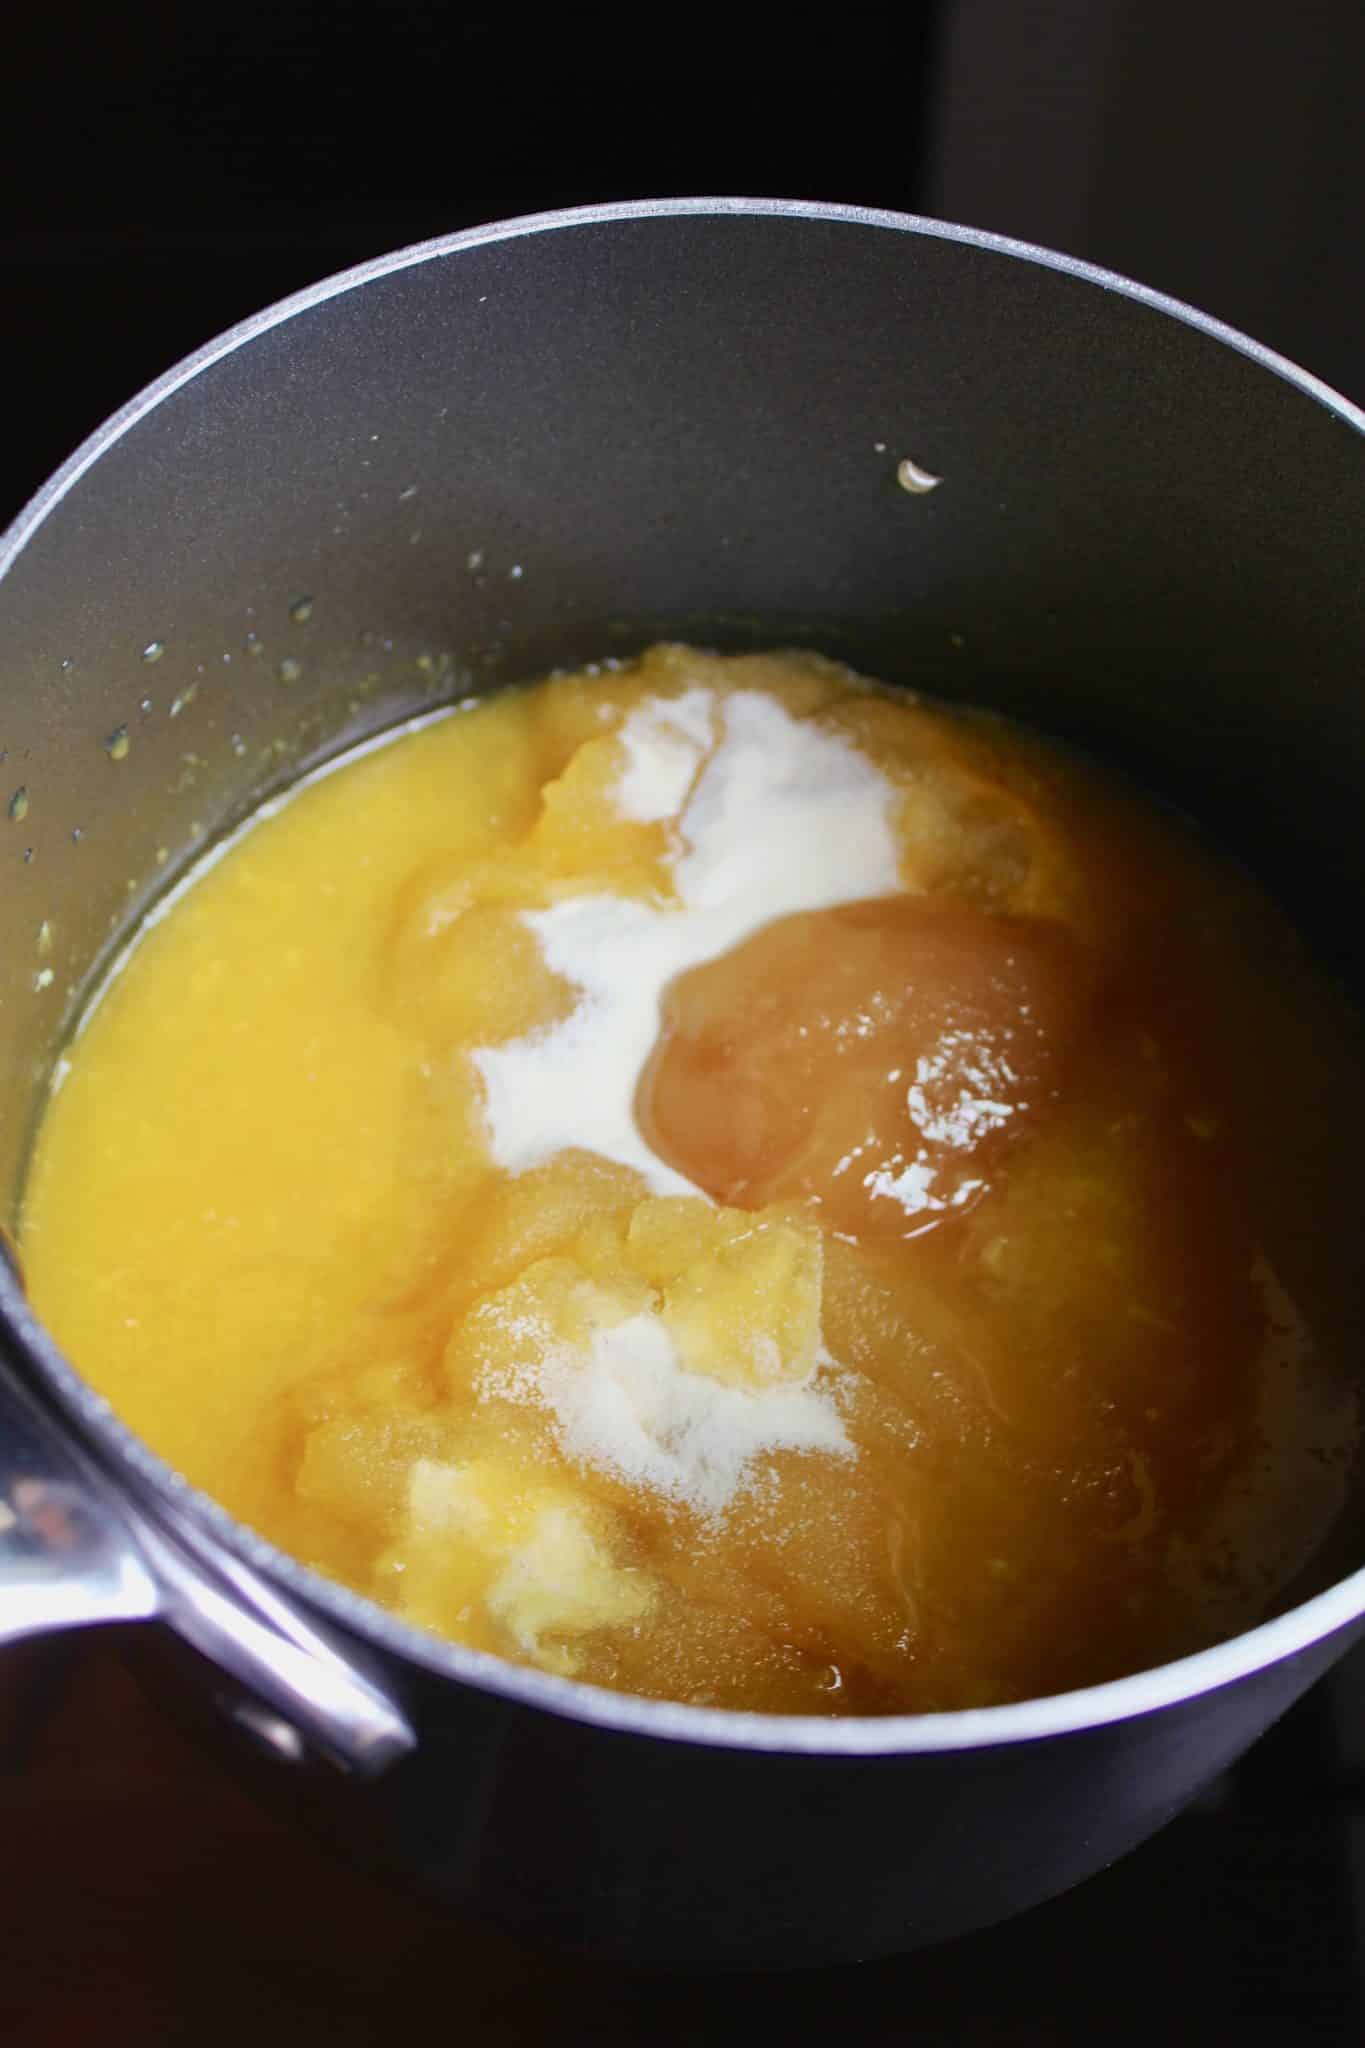 saucepan with ingredients for making homemade orange jello.